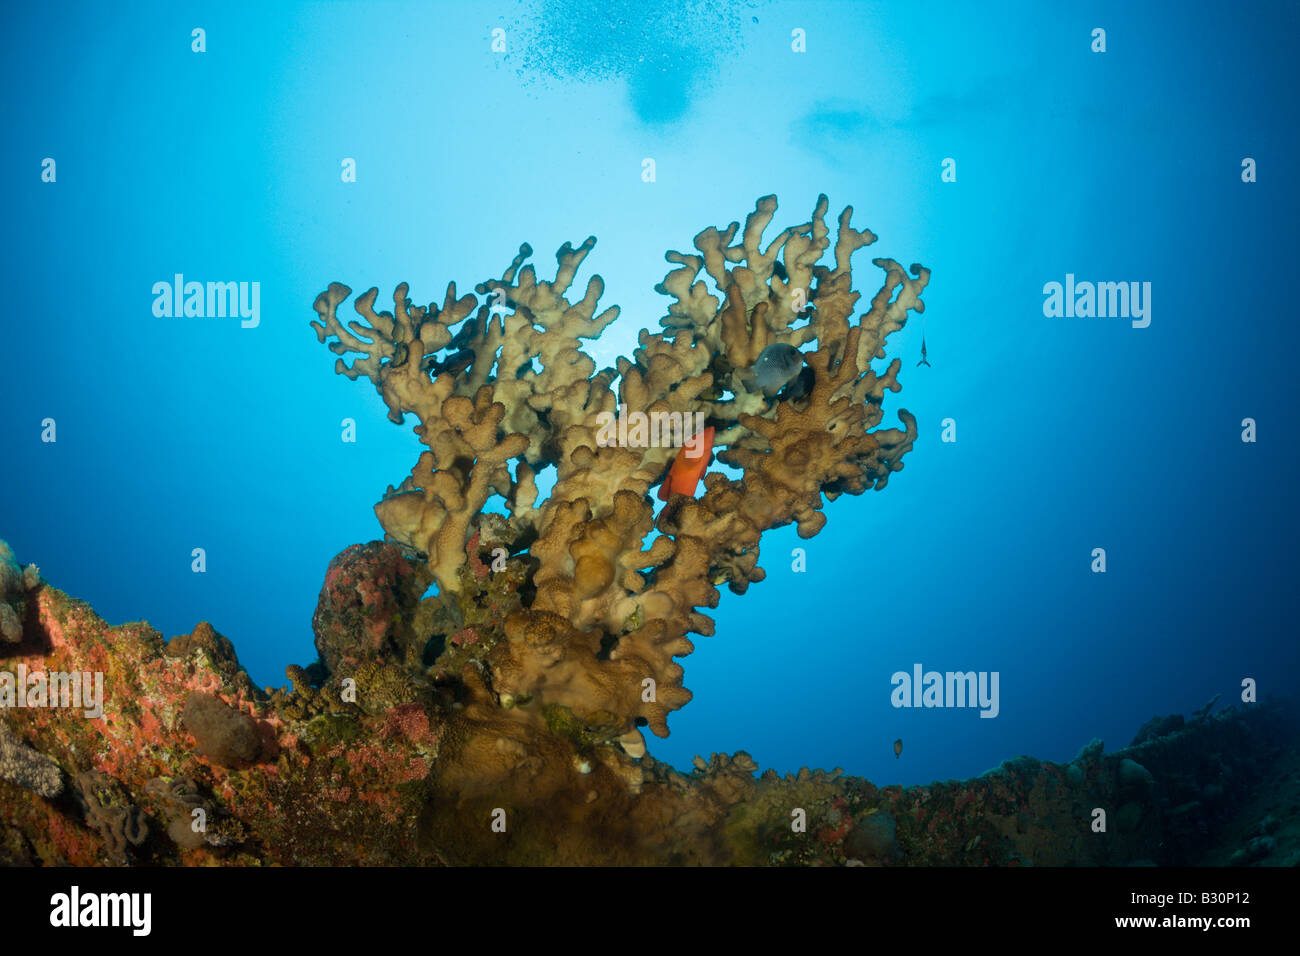 Big Fire Coral at bottom of Wreck HIJMS Nagato Battleship Marshall Islands Bikini Atoll Micronesia Pacific Ocean Stock Photo